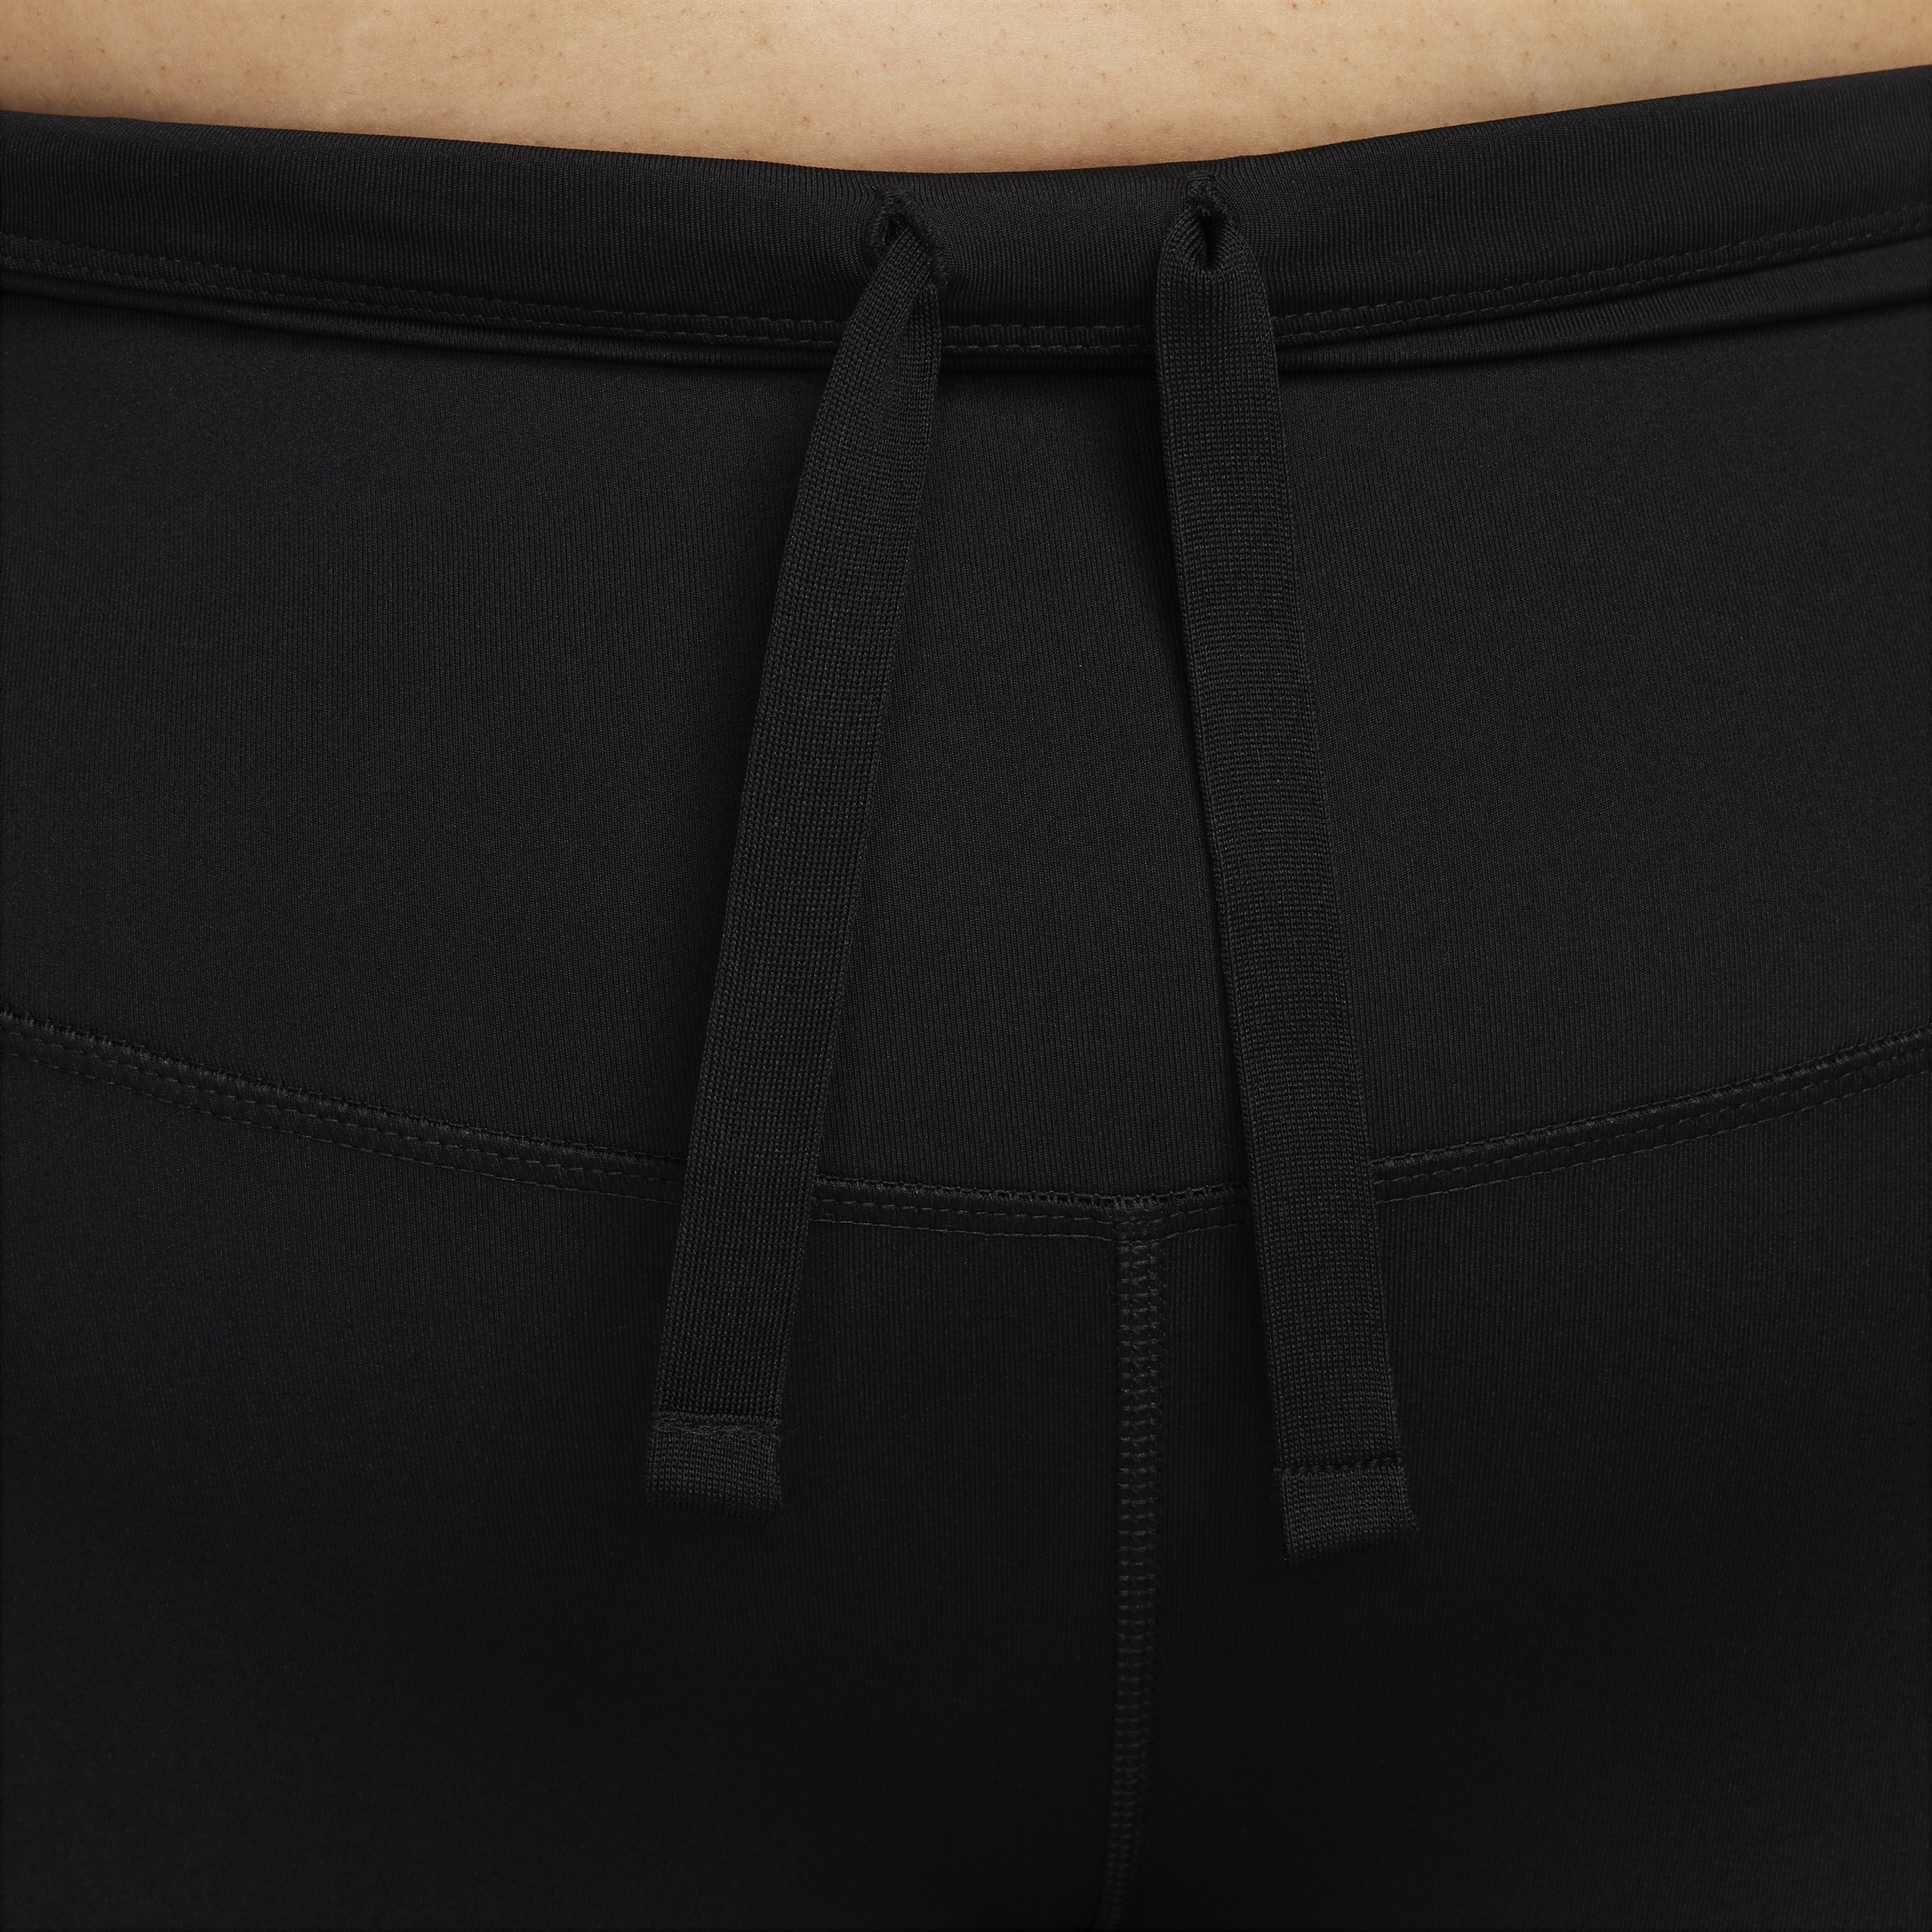 Nike Fast 7 8-hardlooplegging met halfhoge taille en zakken voor dames (Plus Size) Zwart